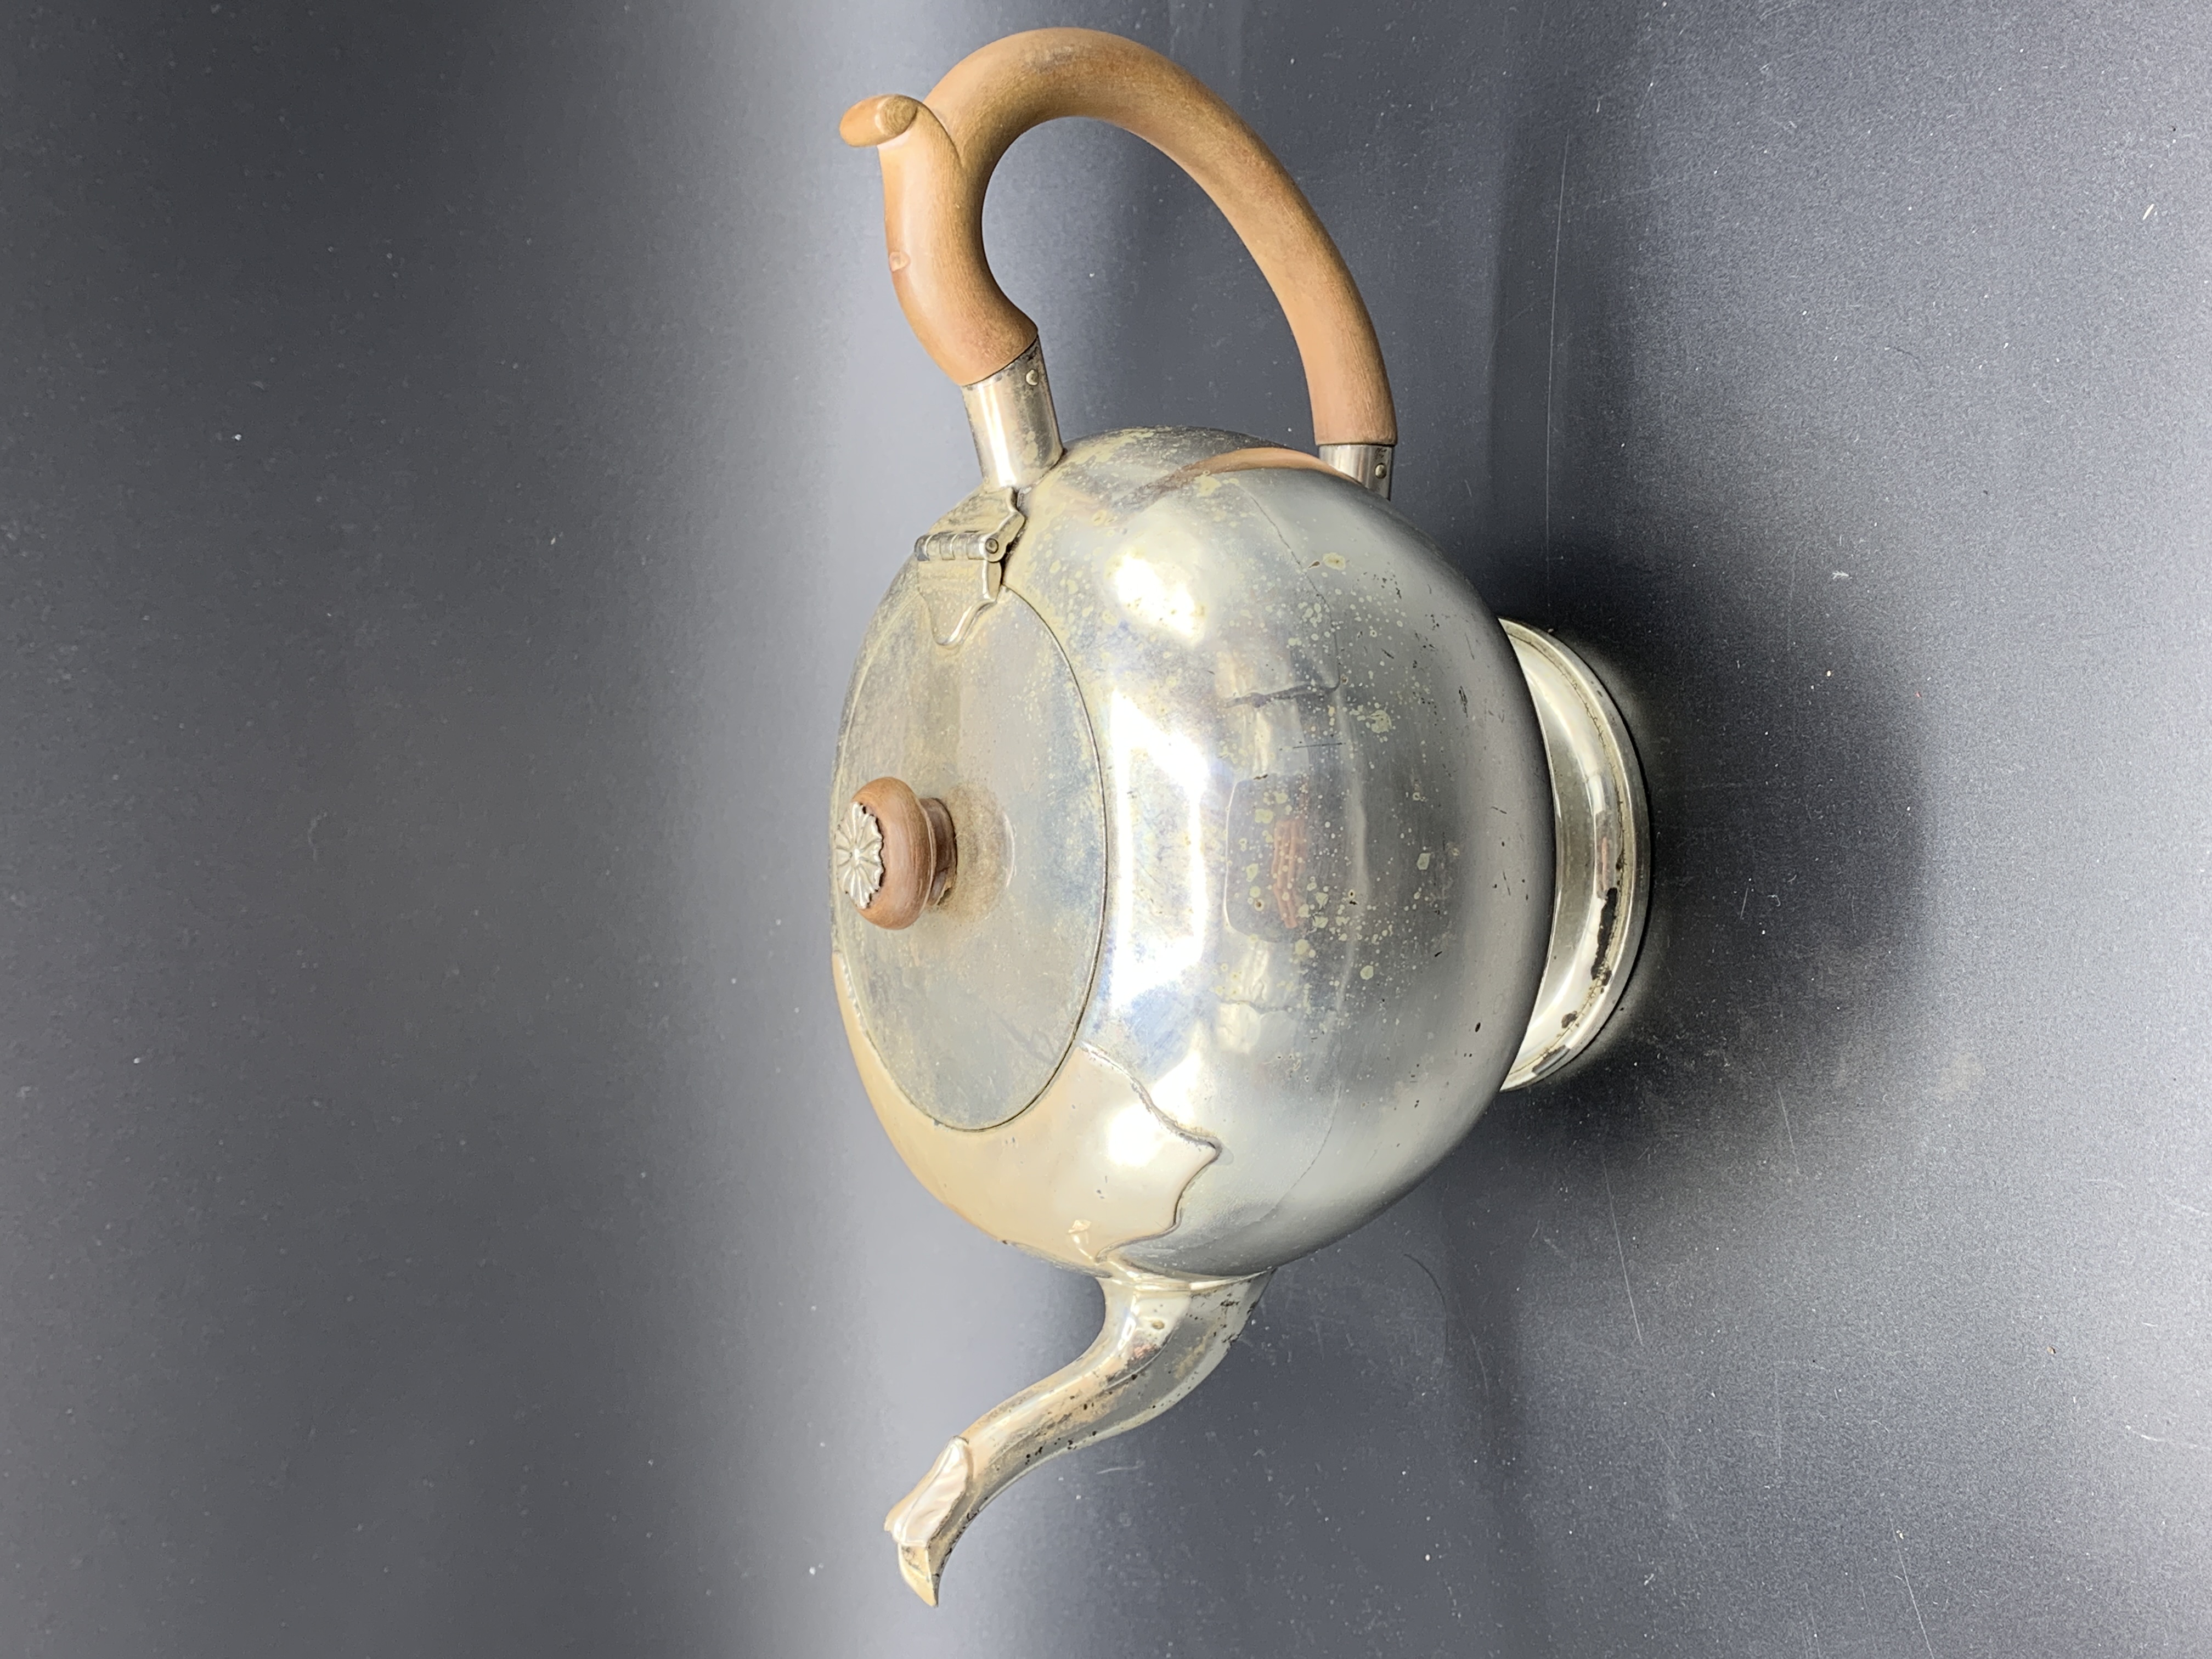 Silver bullet shape teapot, hallmarked London 1927 by Mappin & Webb Ltd - Image 6 of 6